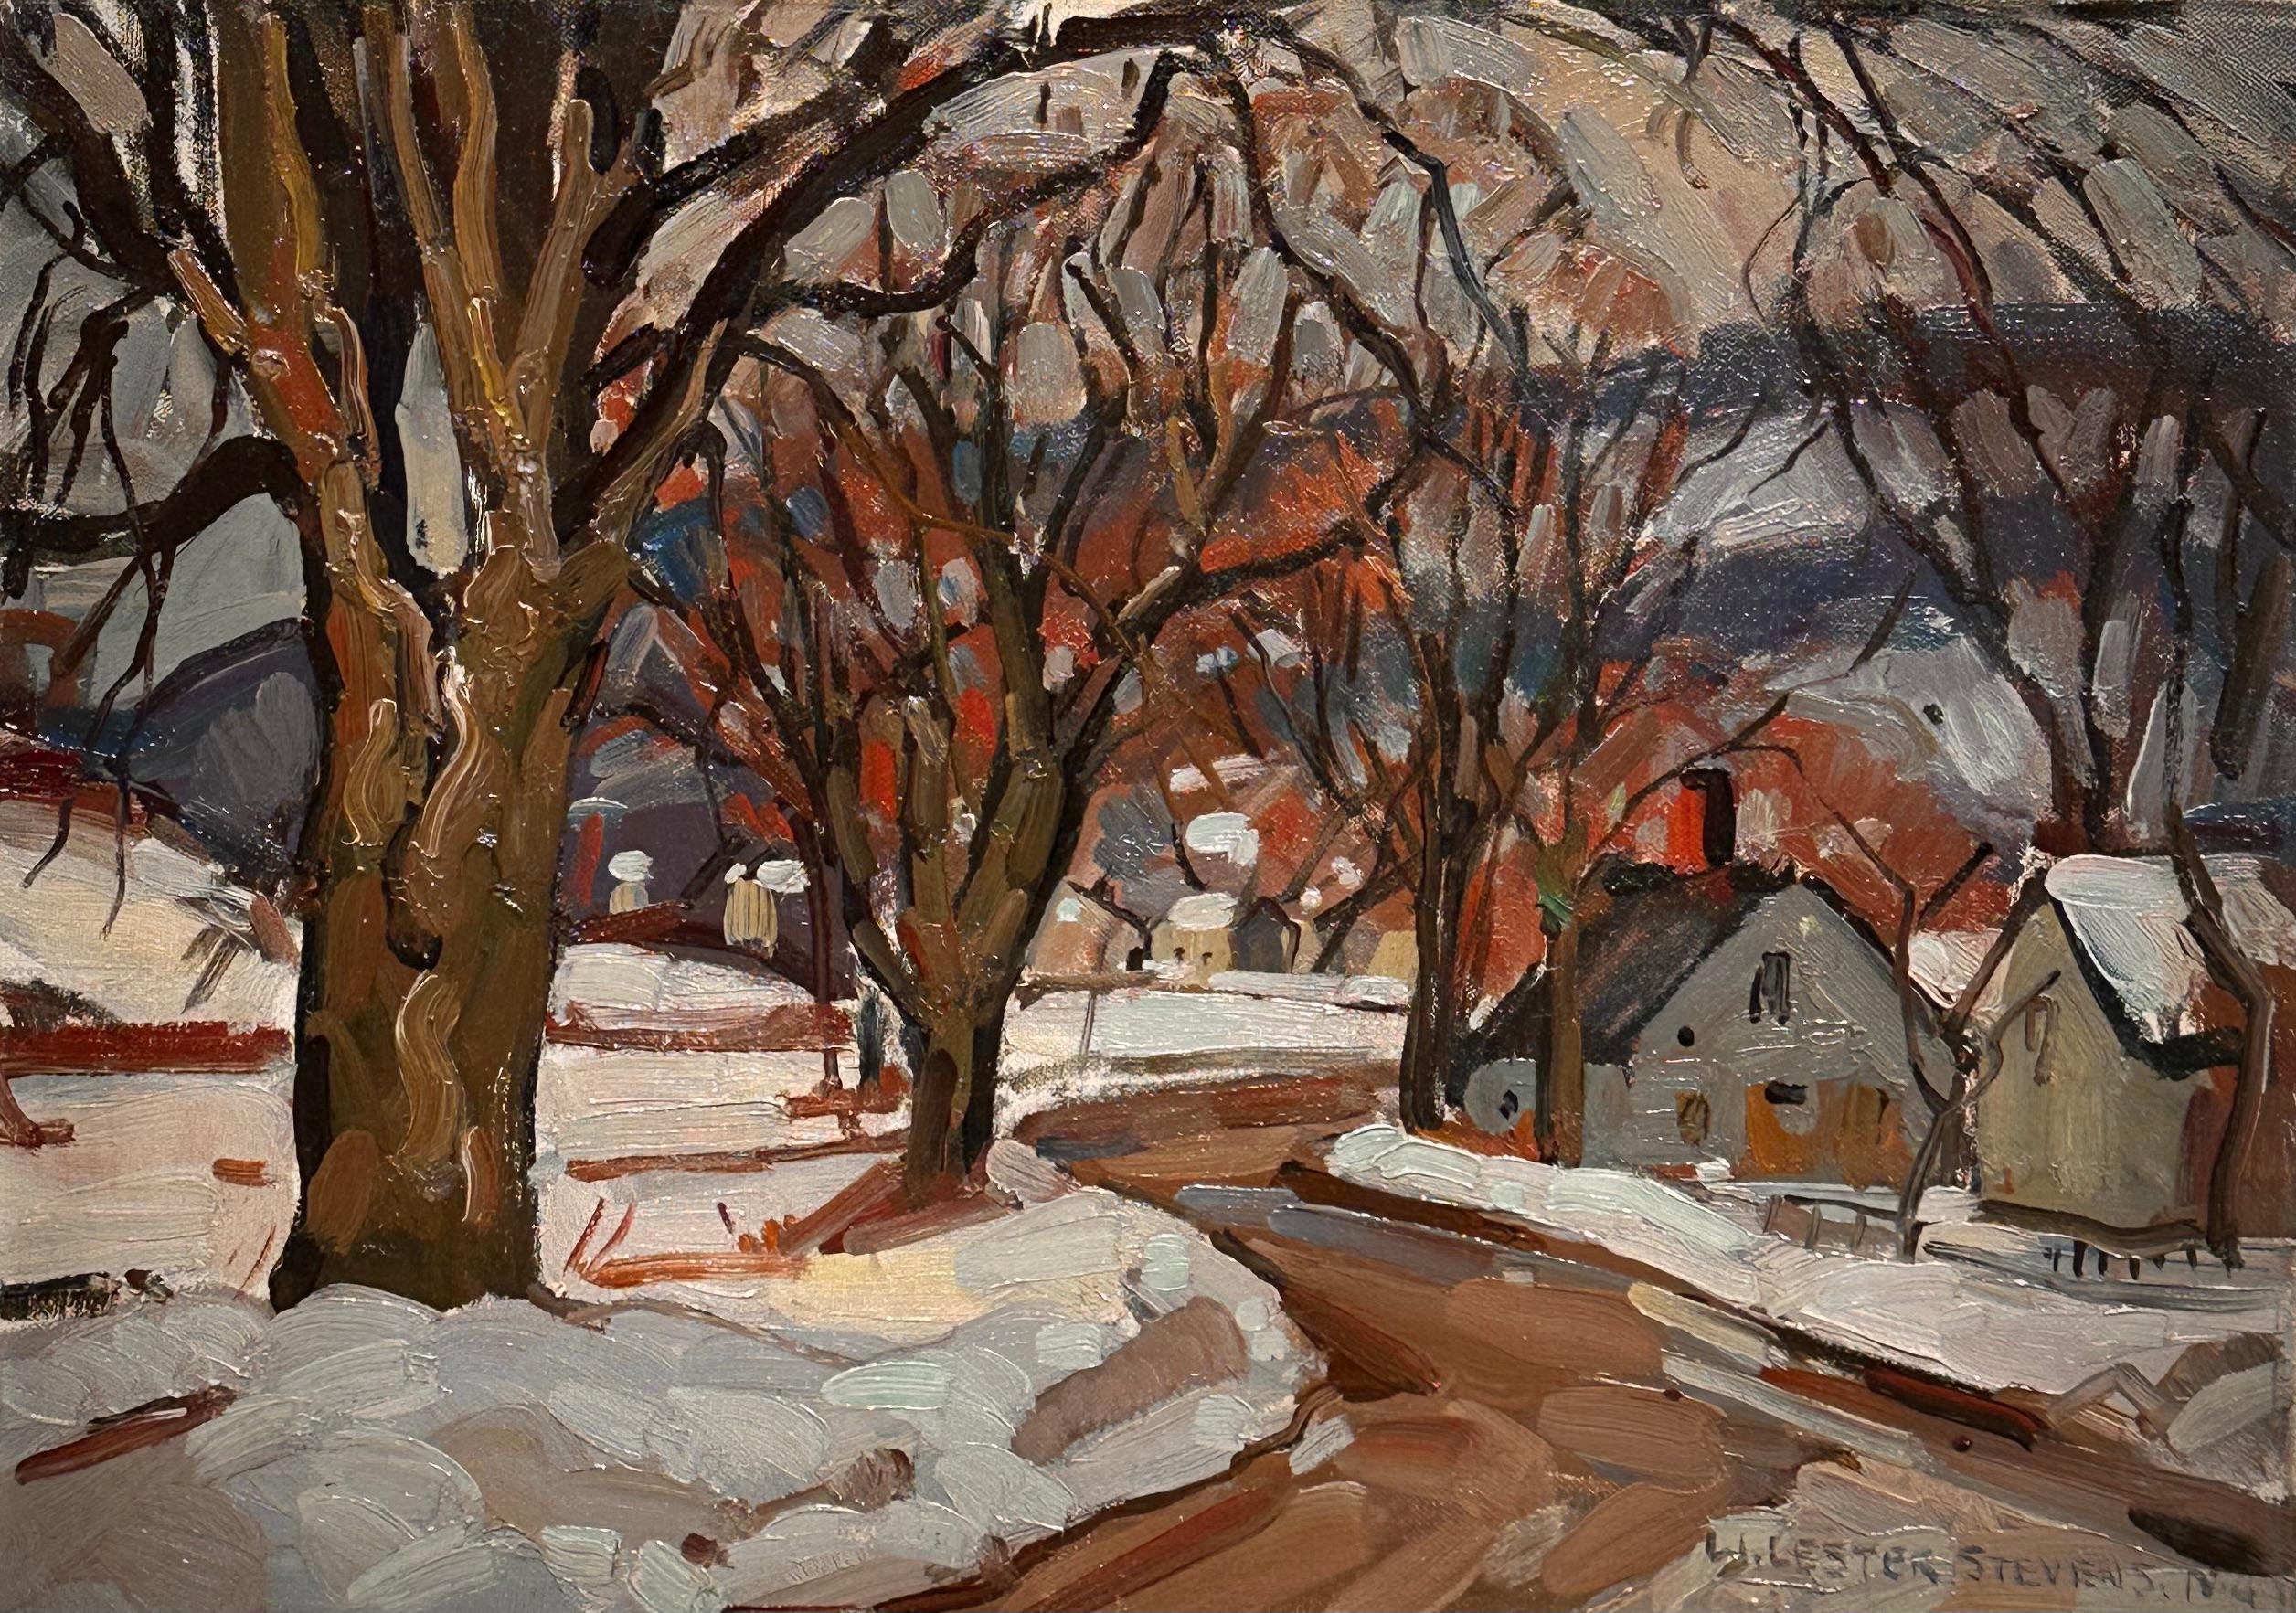 William Lester Stevens Landscape Painting - "Winter Road" - Historic Rockport Artist, Landscape, Winter Season